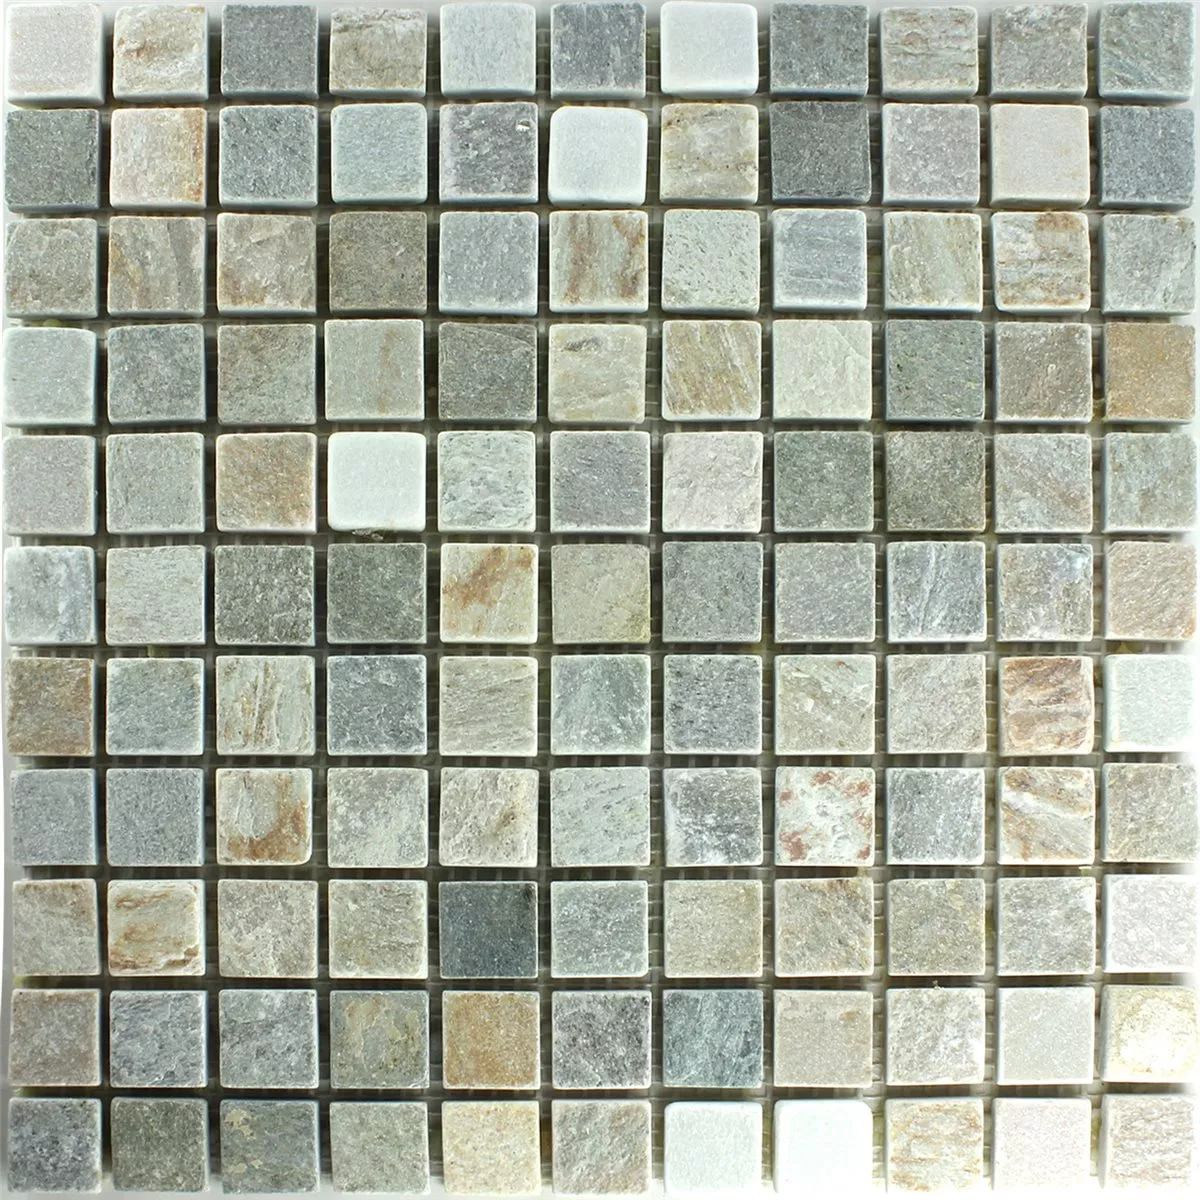 Mozaik Pločice Kvarcit Bež Siva 22x22mm